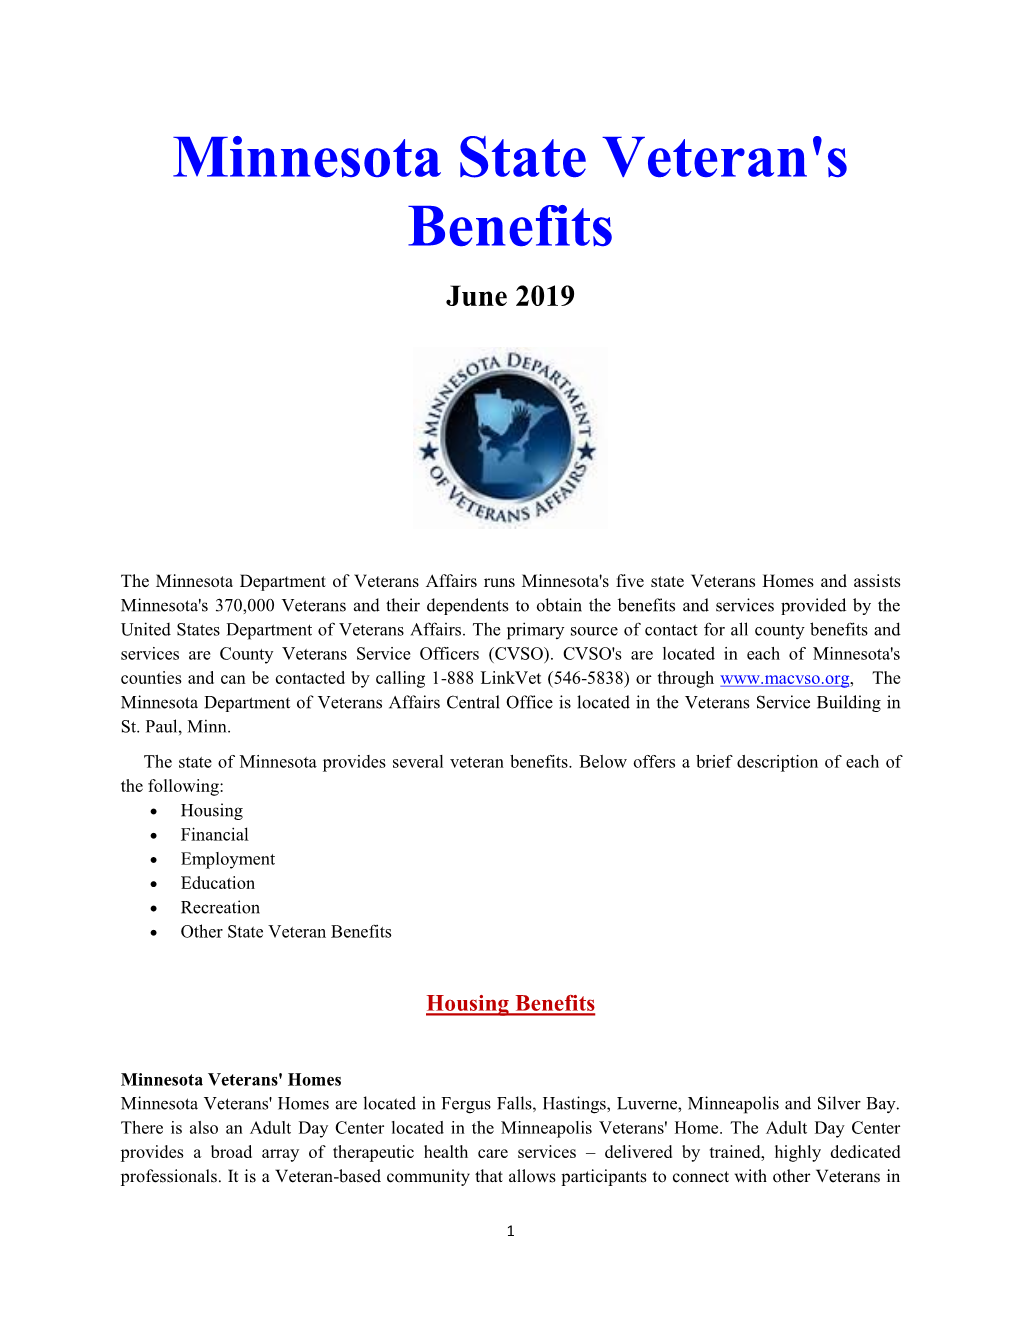 Minnesota State Veteran's Benefits